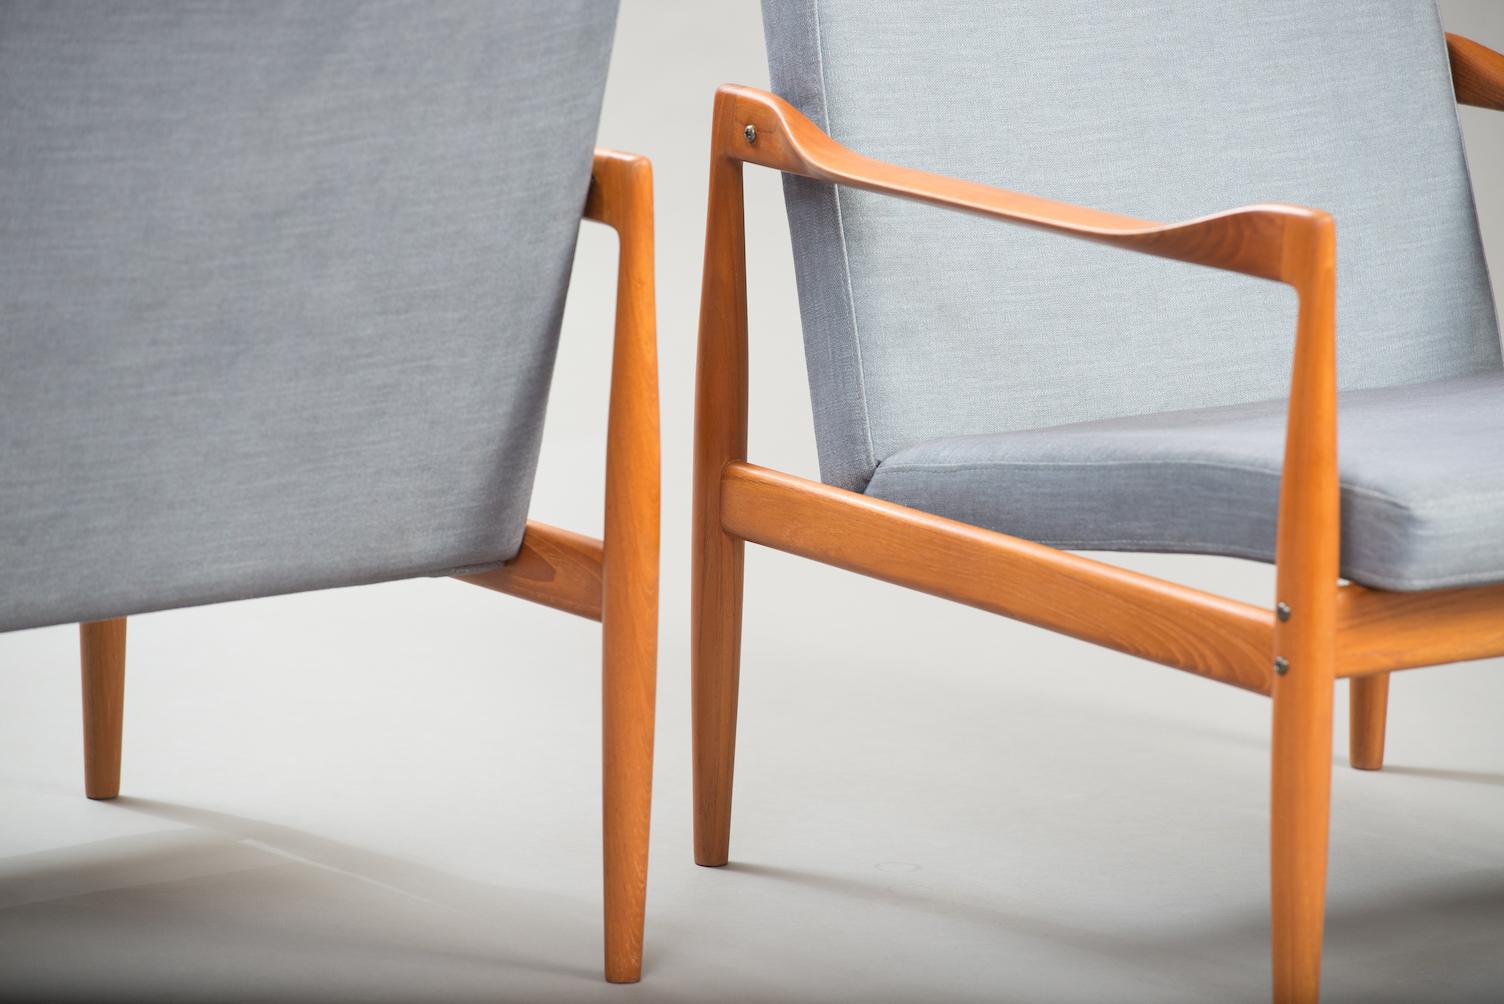 Varnished Kai Kristiansen Midcentury Teak Lounge Chairs for Fritz Hansen, Set of Two For Sale